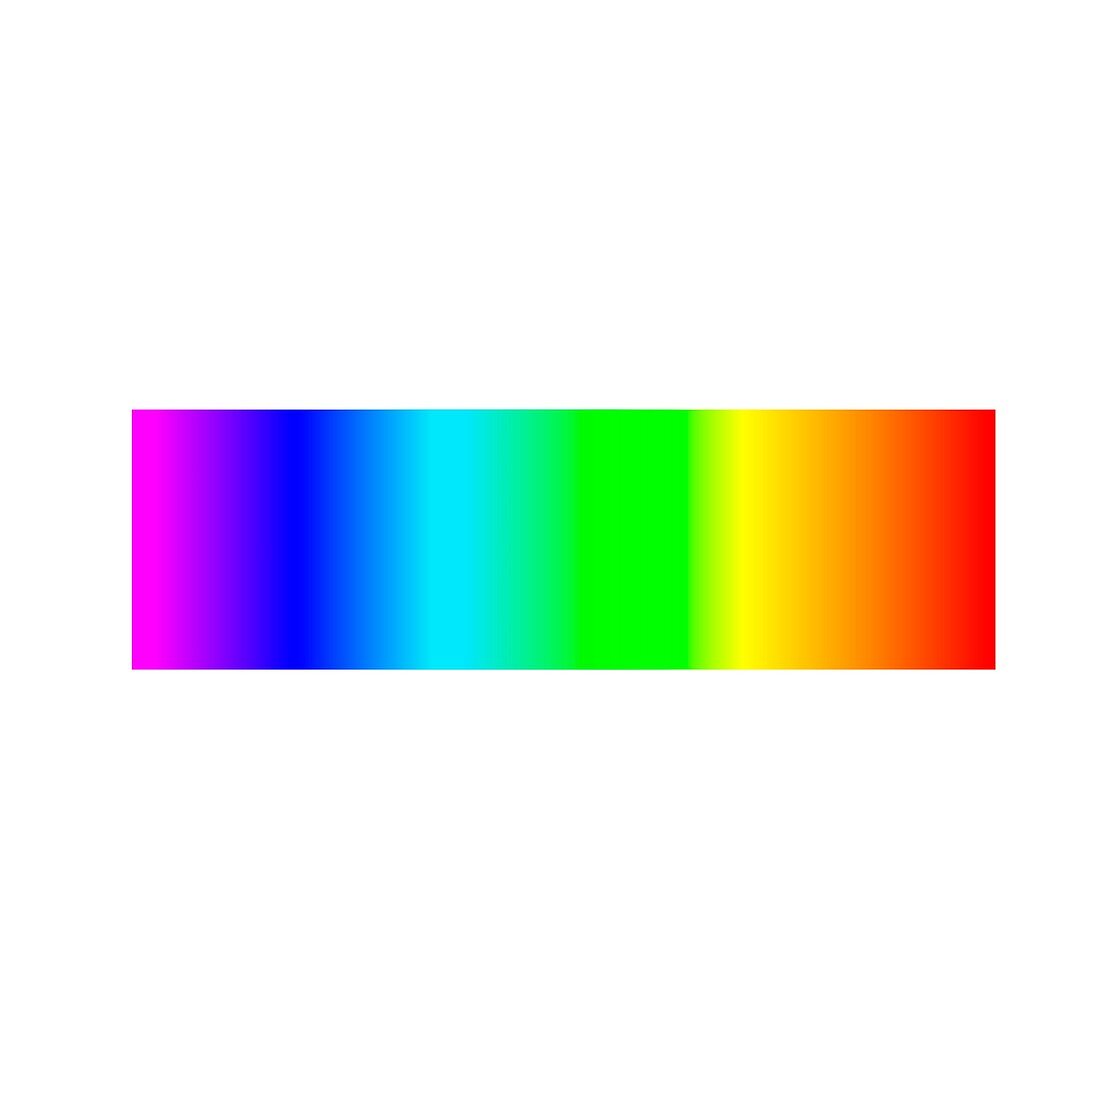 Visible spectrum, illustration